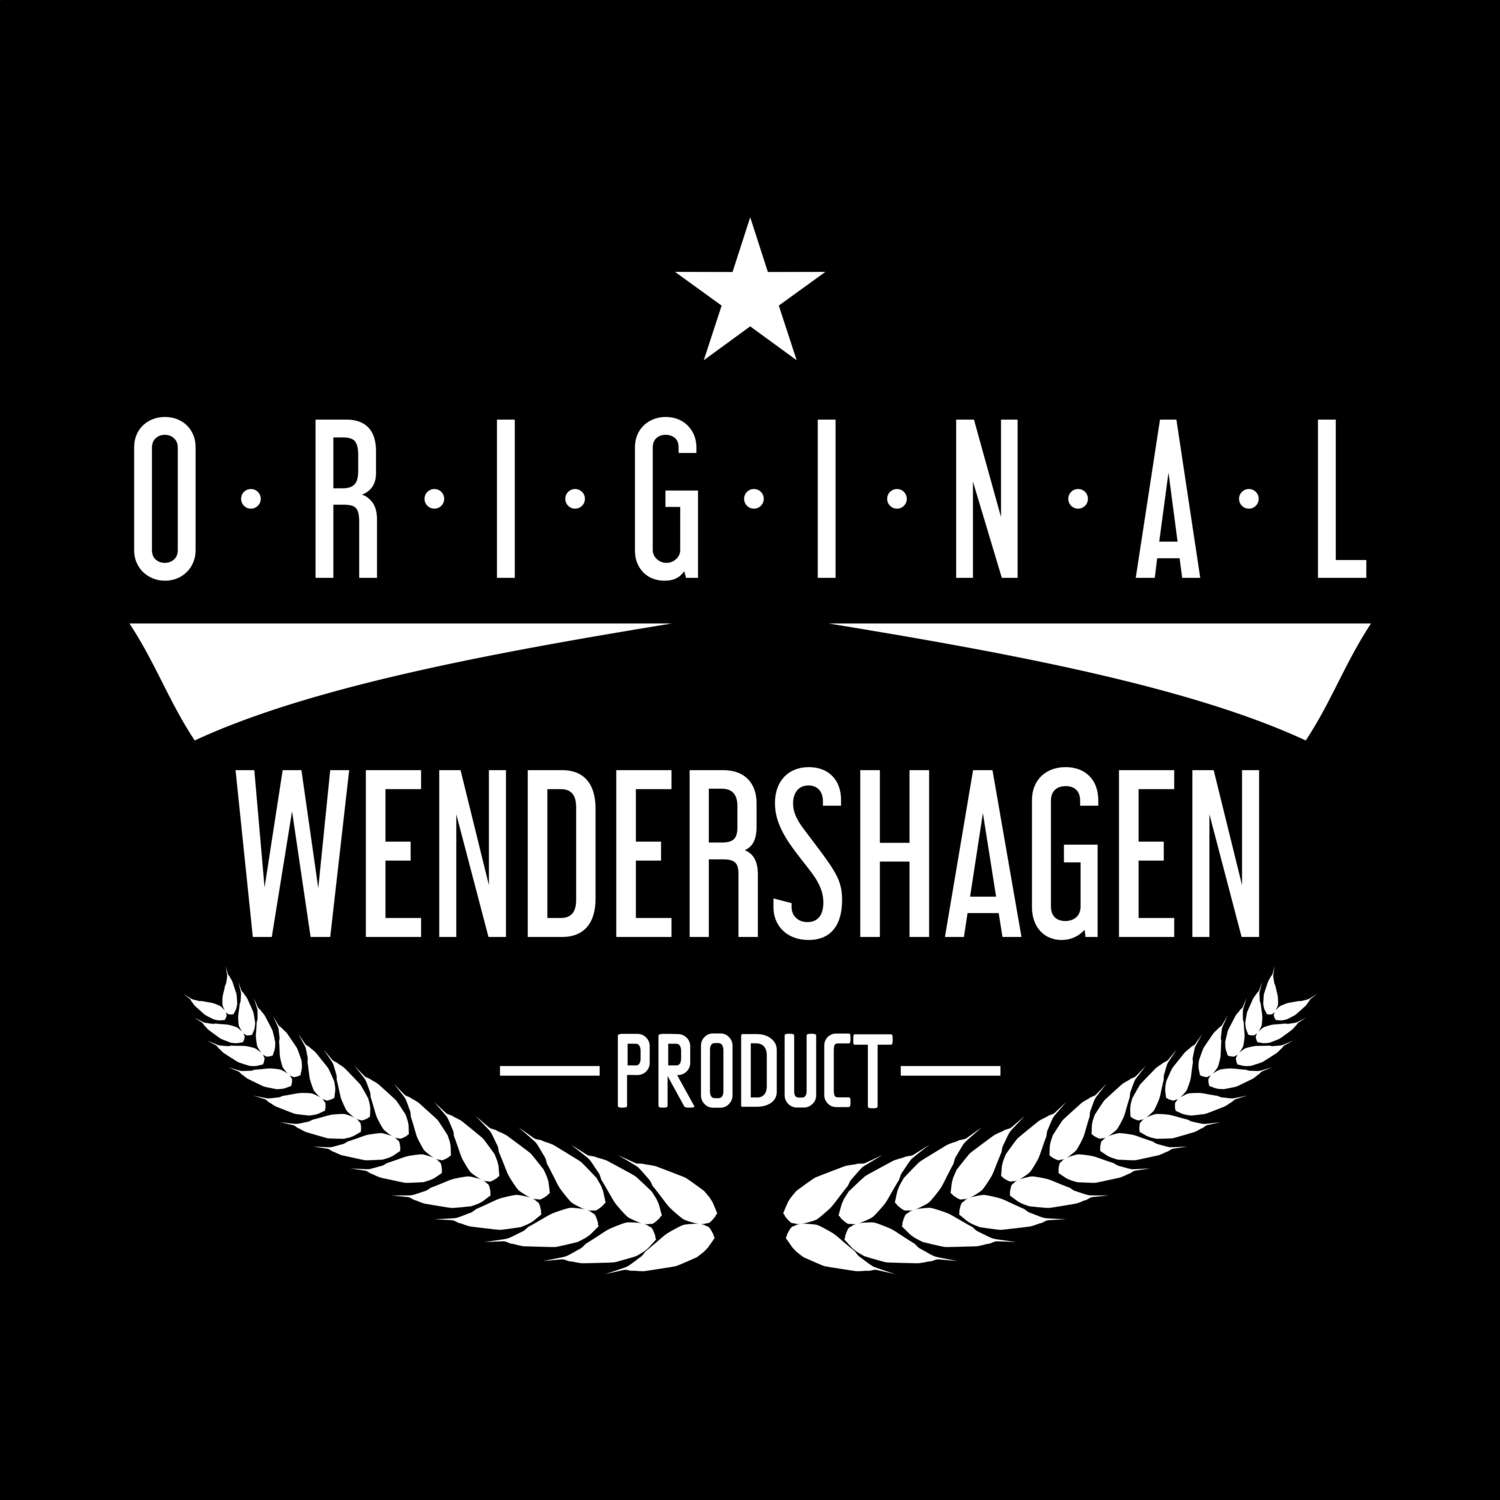 Wendershagen T-Shirt »Original Product«